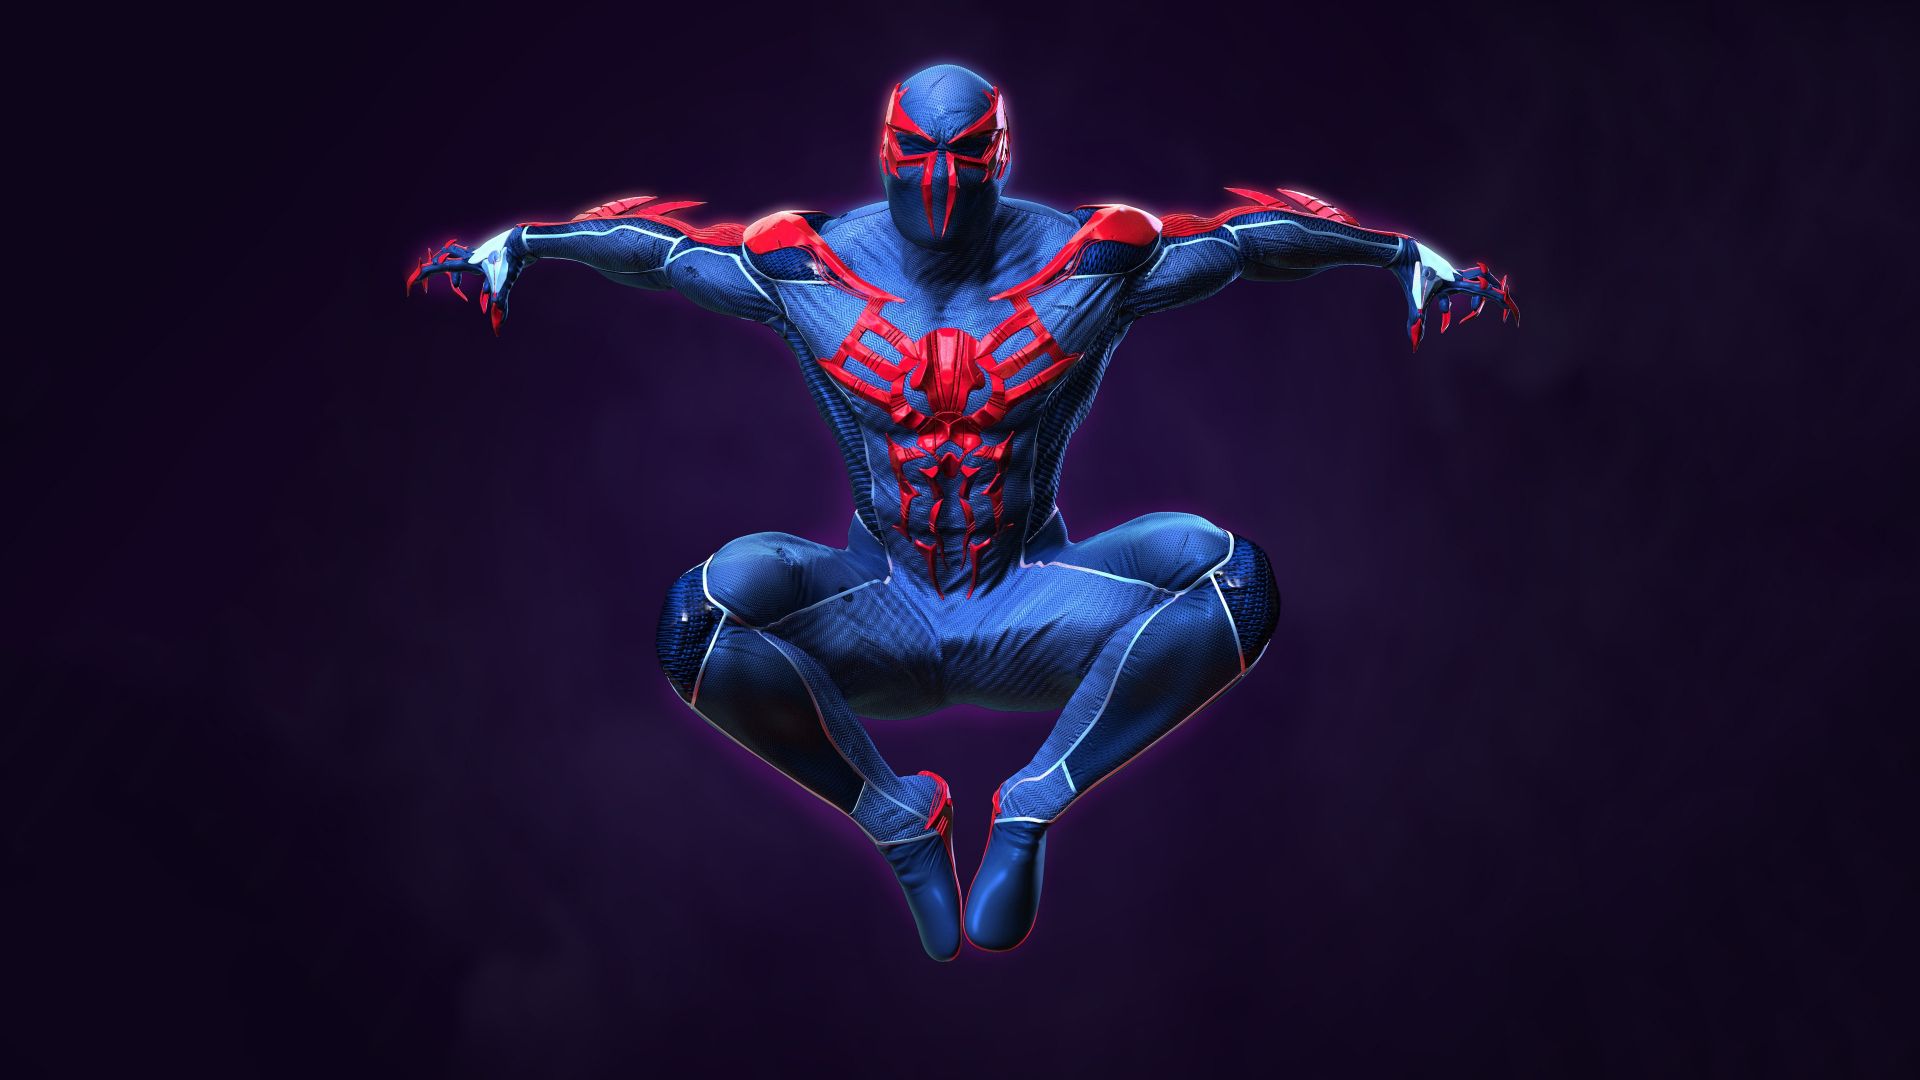 Desktop Wallpaper Spider Man 2099, Video Game, Artwork, Hd Image